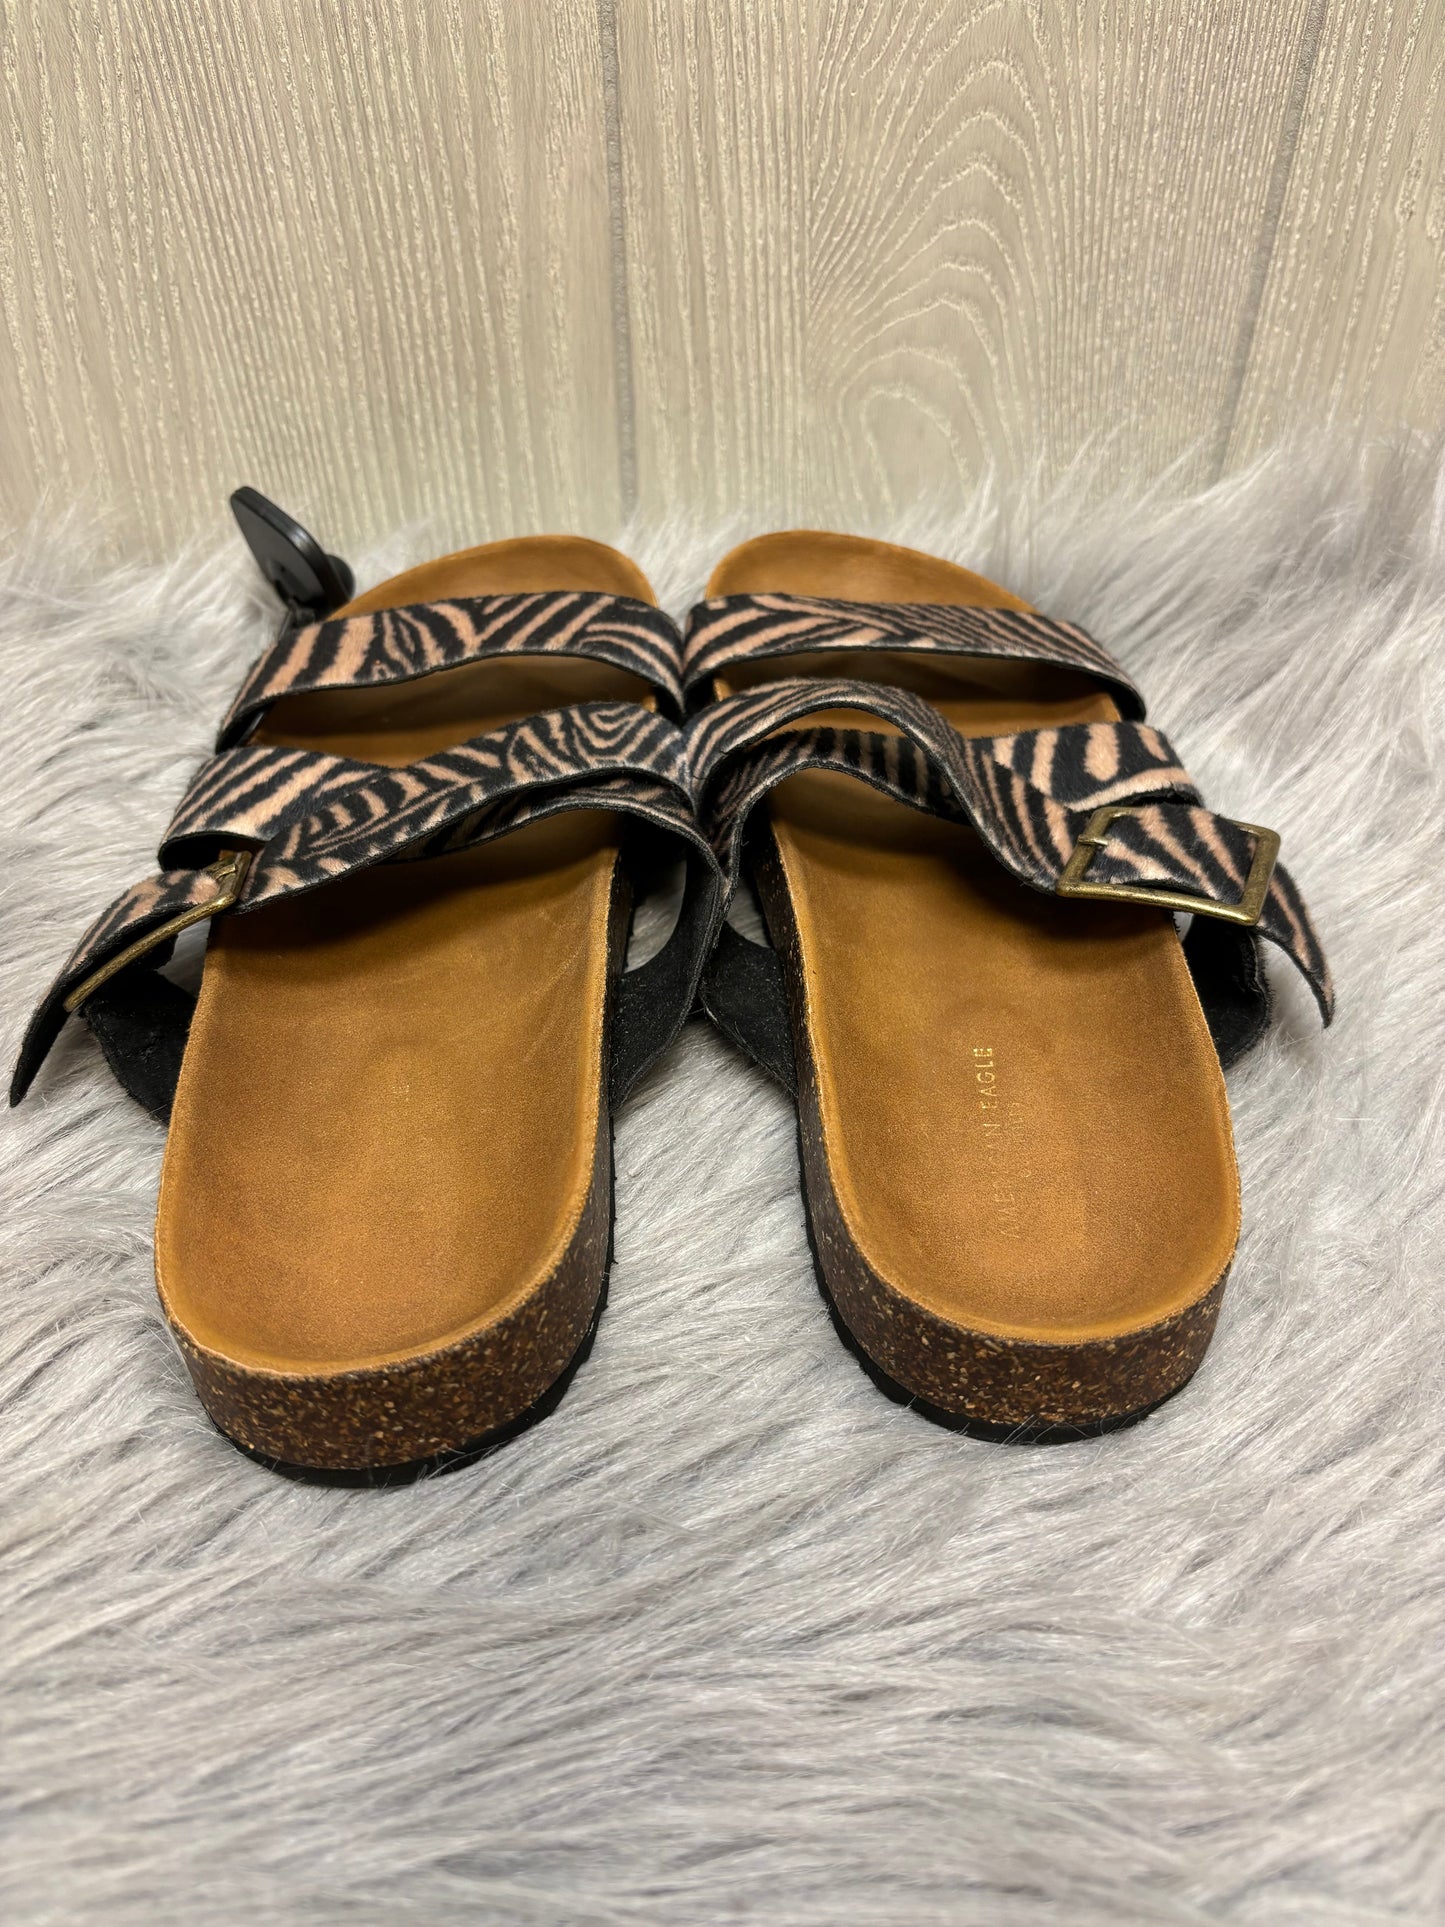 Zebra Print Sandals Flats American Eagle Shoes, Size 8